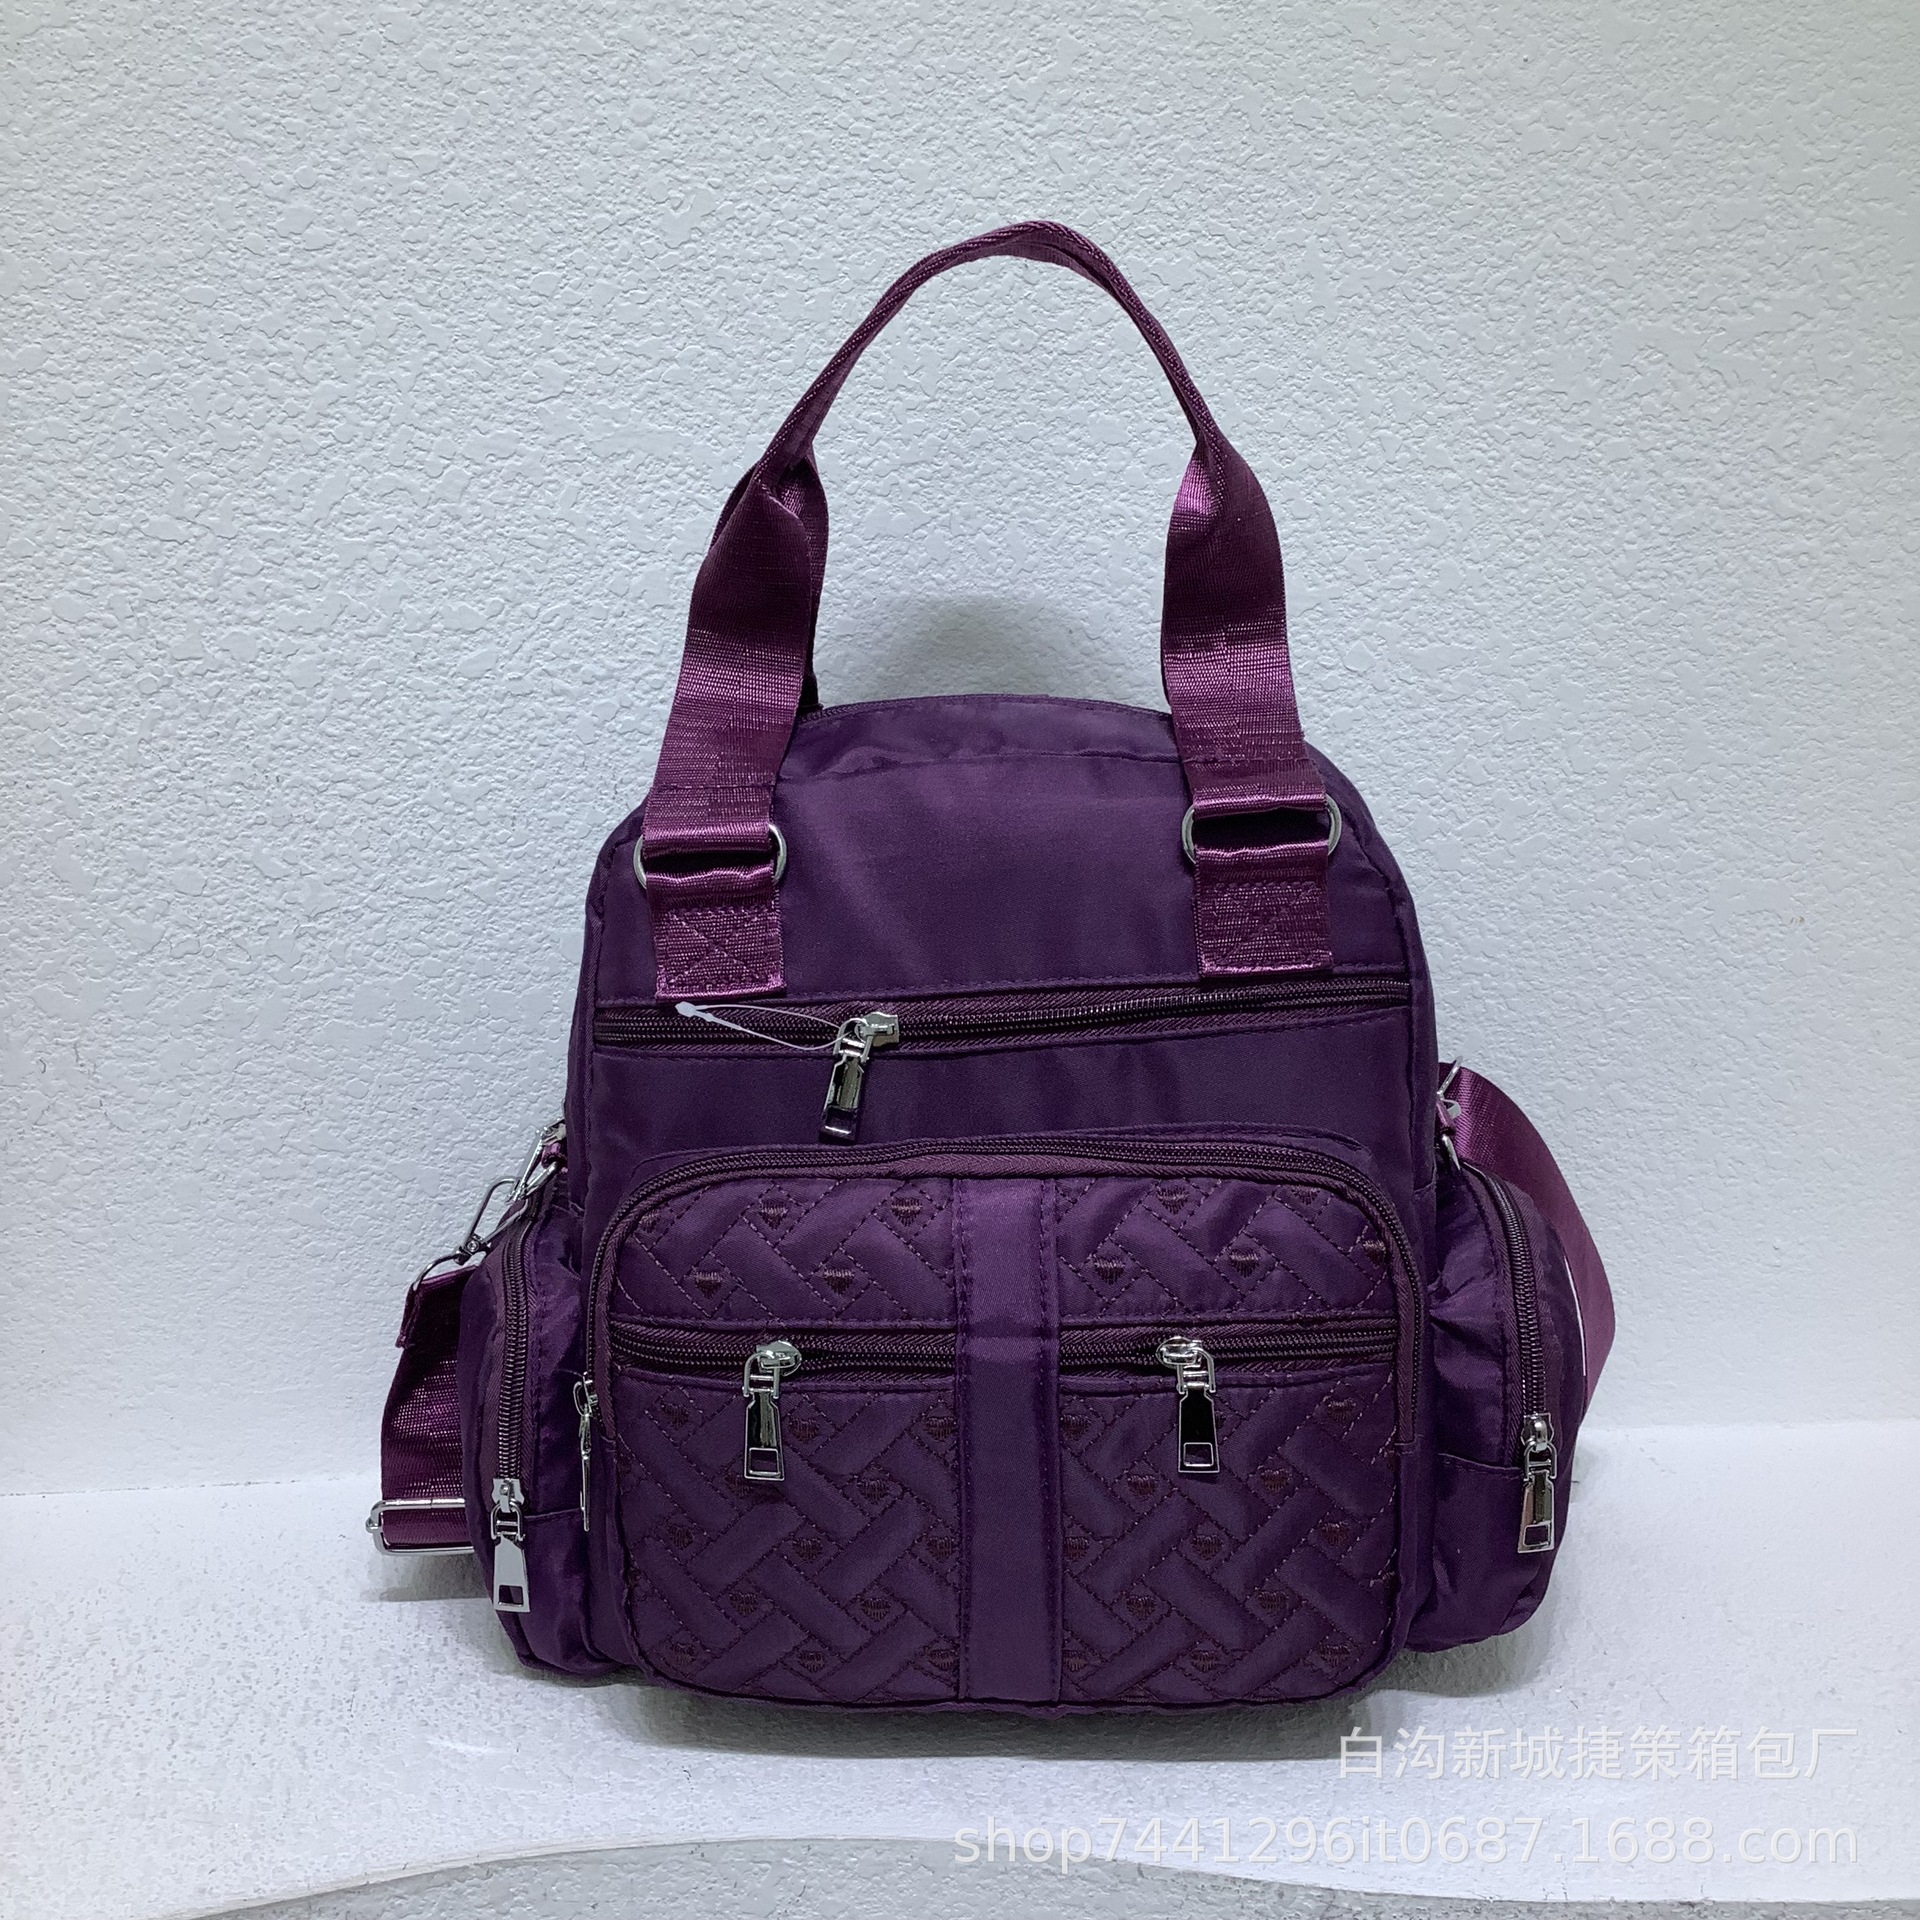 New Women's Bag Large Capacity Nylon Tote Diamond Embroidery Thread Multi-Functional Shoulder Messenger Bag Backpack